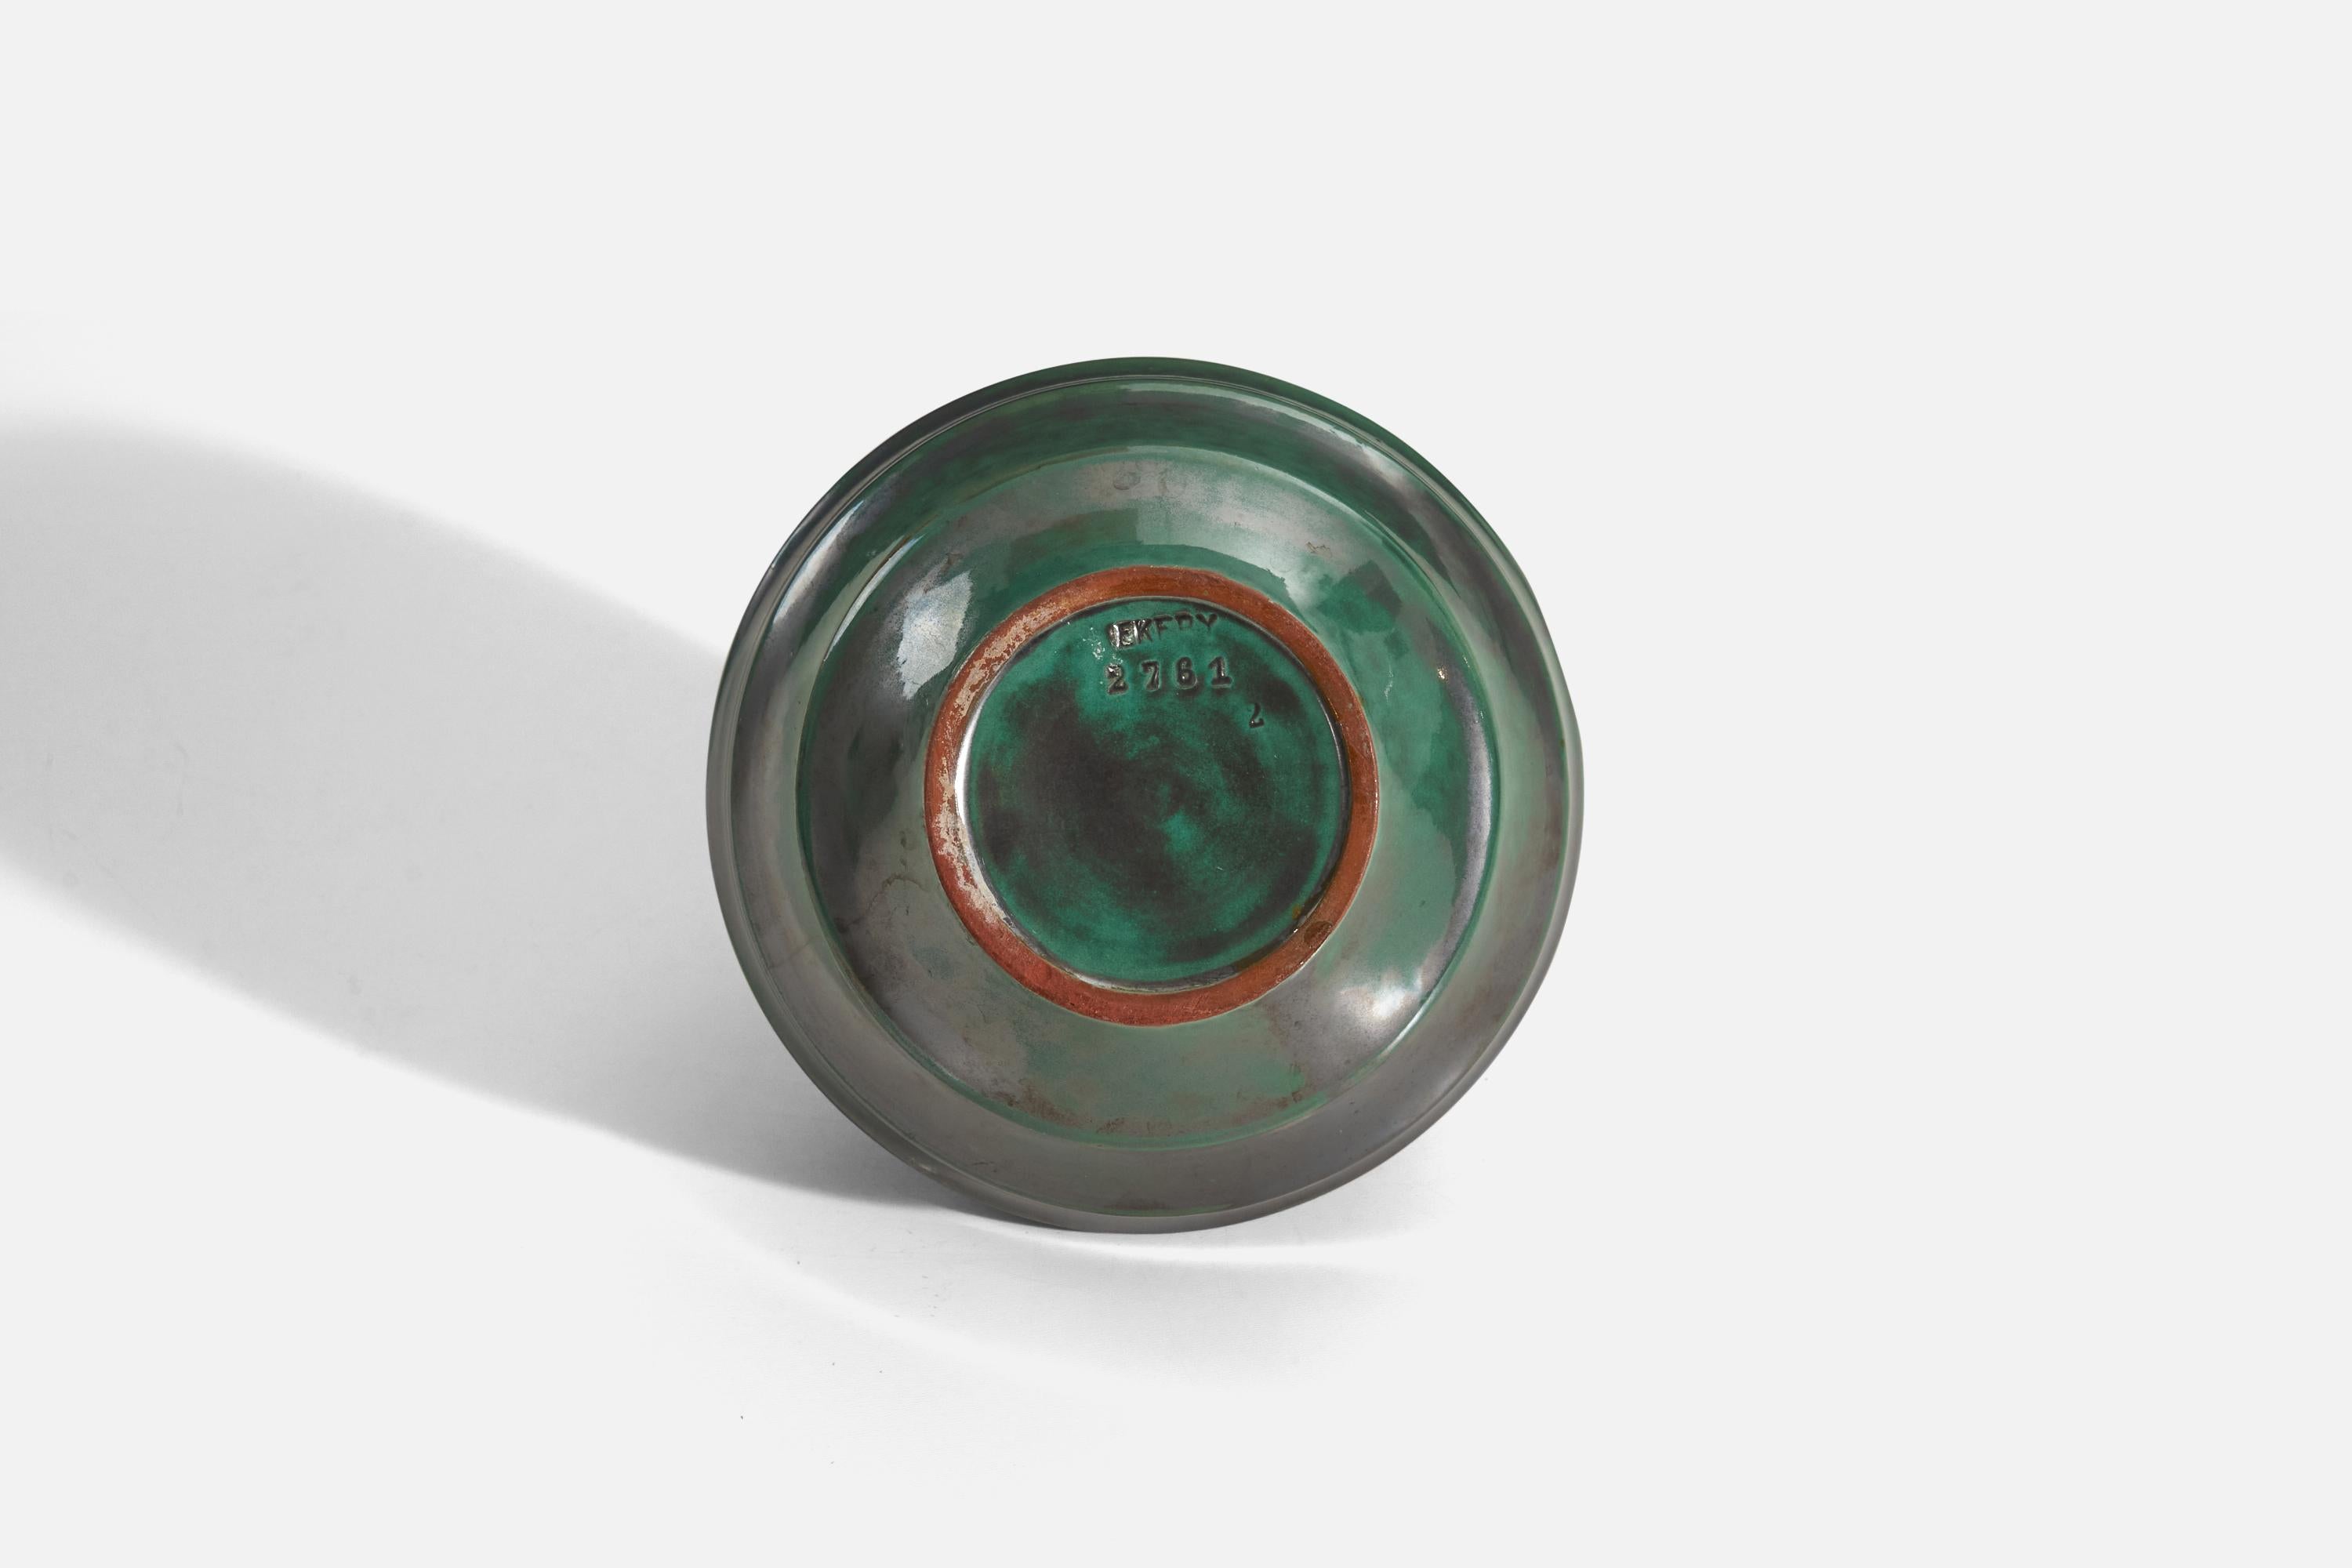 Mid-20th Century Upsala-Ekeby, Vase, Green and Orange-Glazed Earthenware, Sweden, 1940s